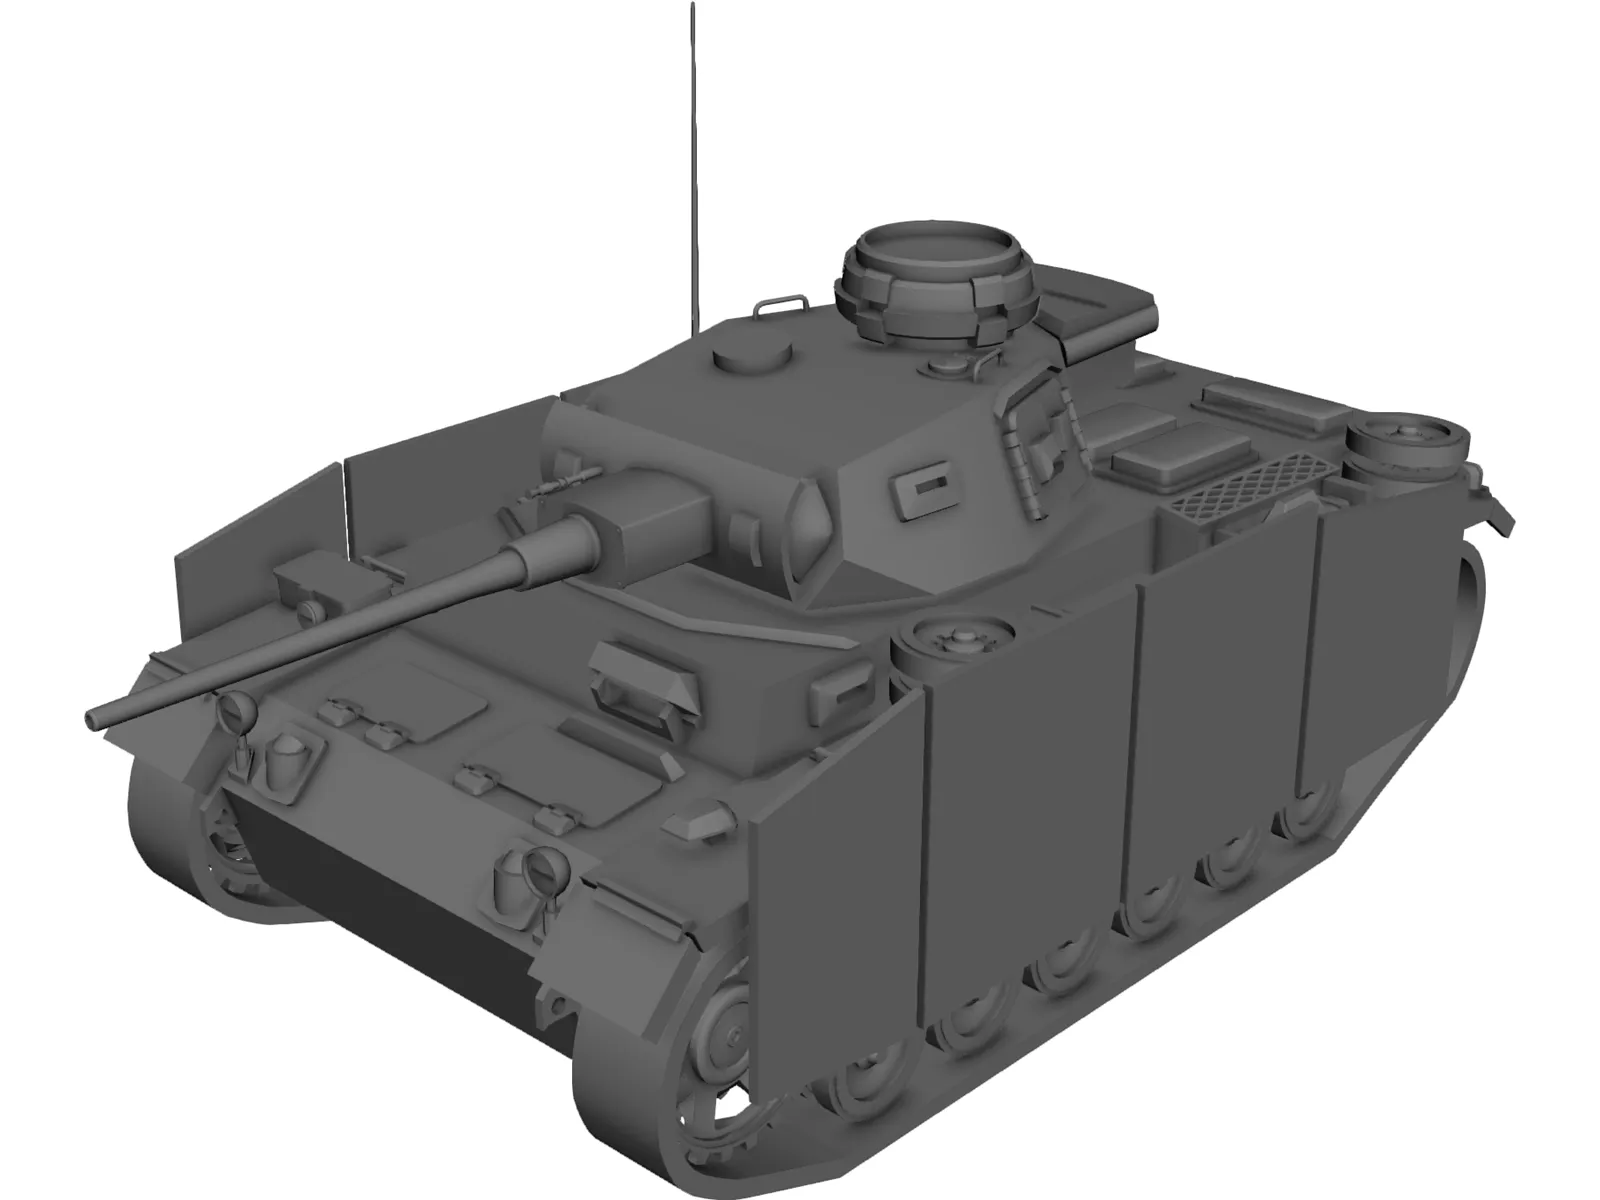 Unihertz 8849 tank 1. 3д Панзер. Модель корпуса Corsair Panzer 3d. Панцер 3 м. Джагд Панзер.